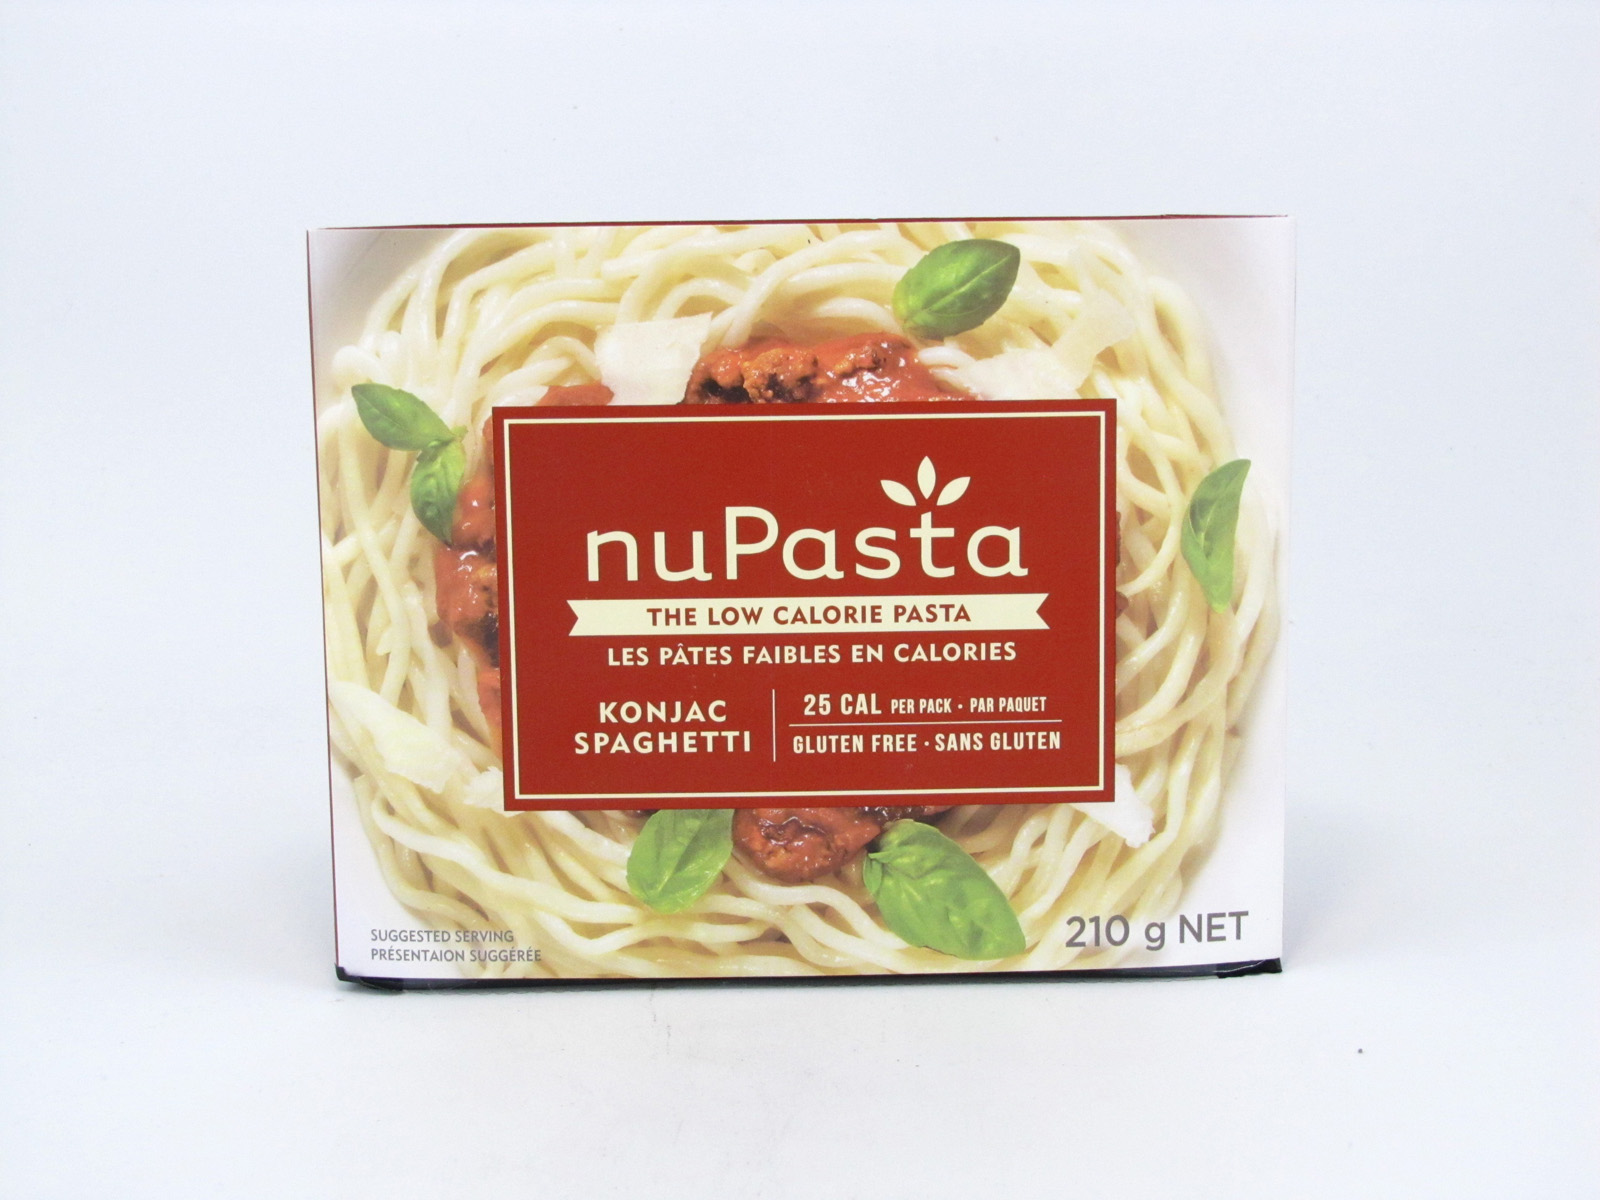 nuPasta - Spaghetti - front view